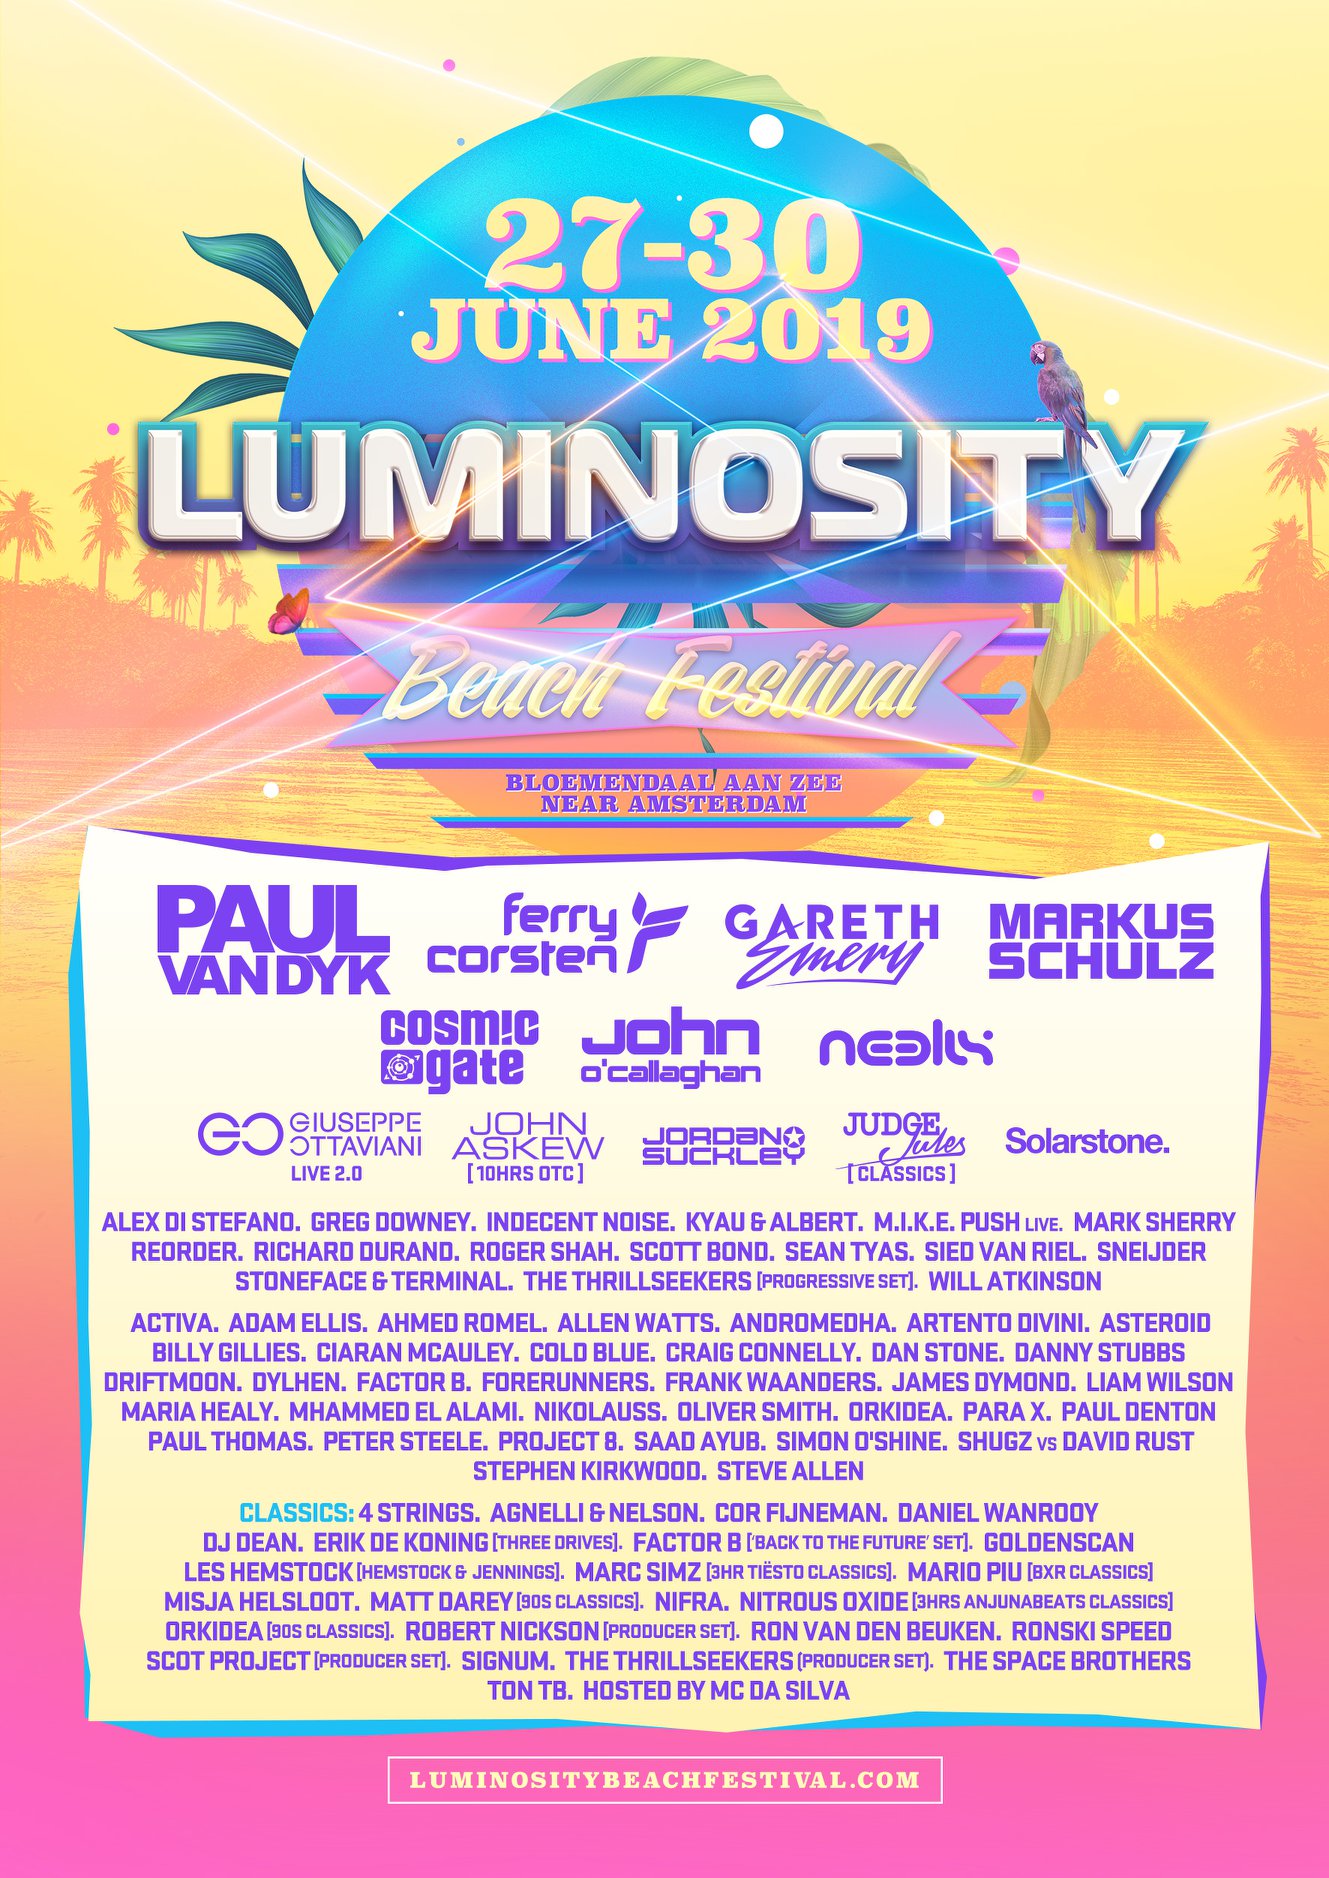 Luminosity Beach Festival 2018 - Full Lineup